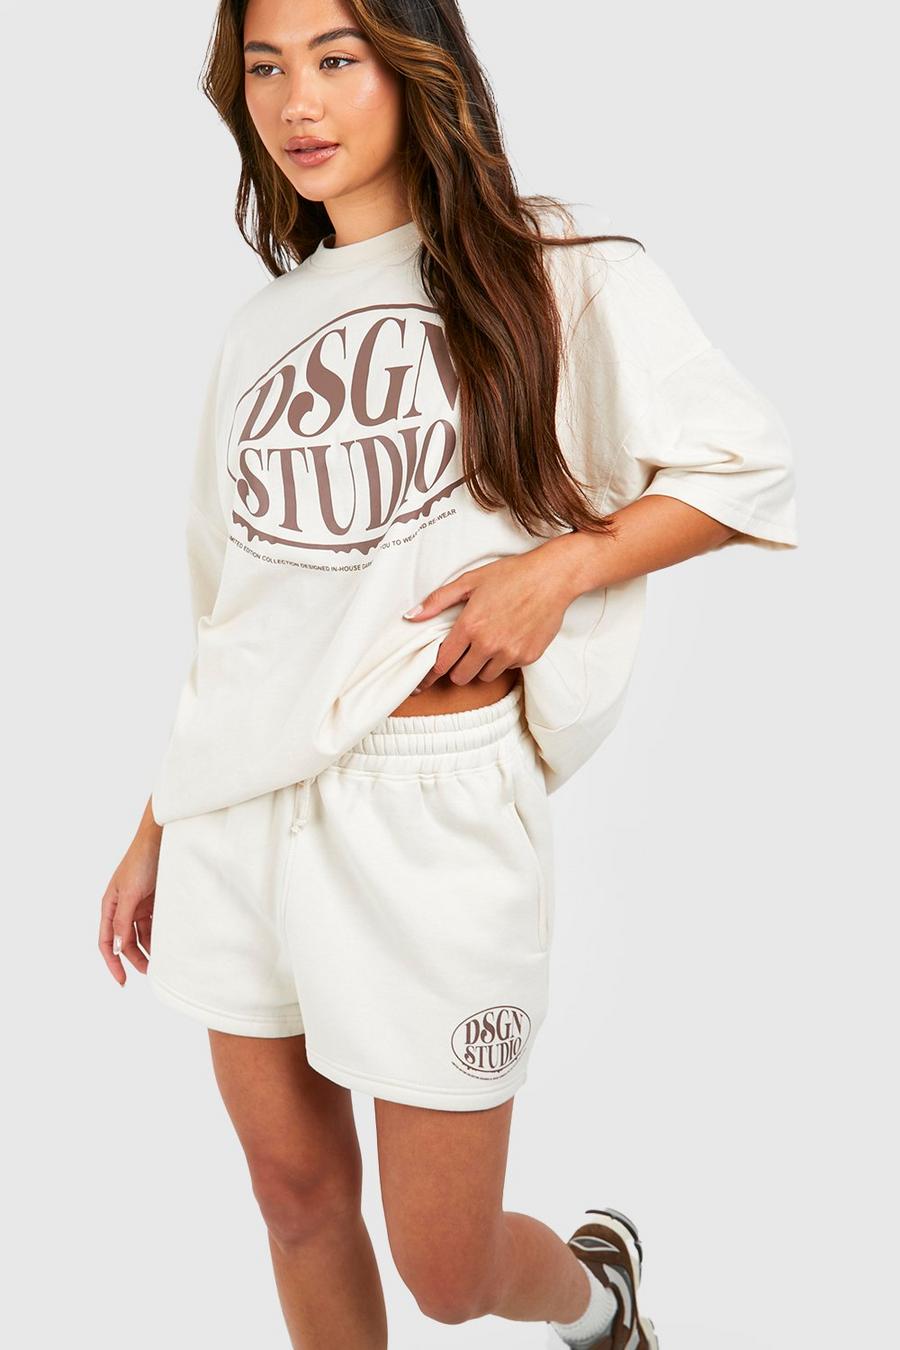 T-Shirt mit Dsgn Studio Slogan & Shorts, Stone